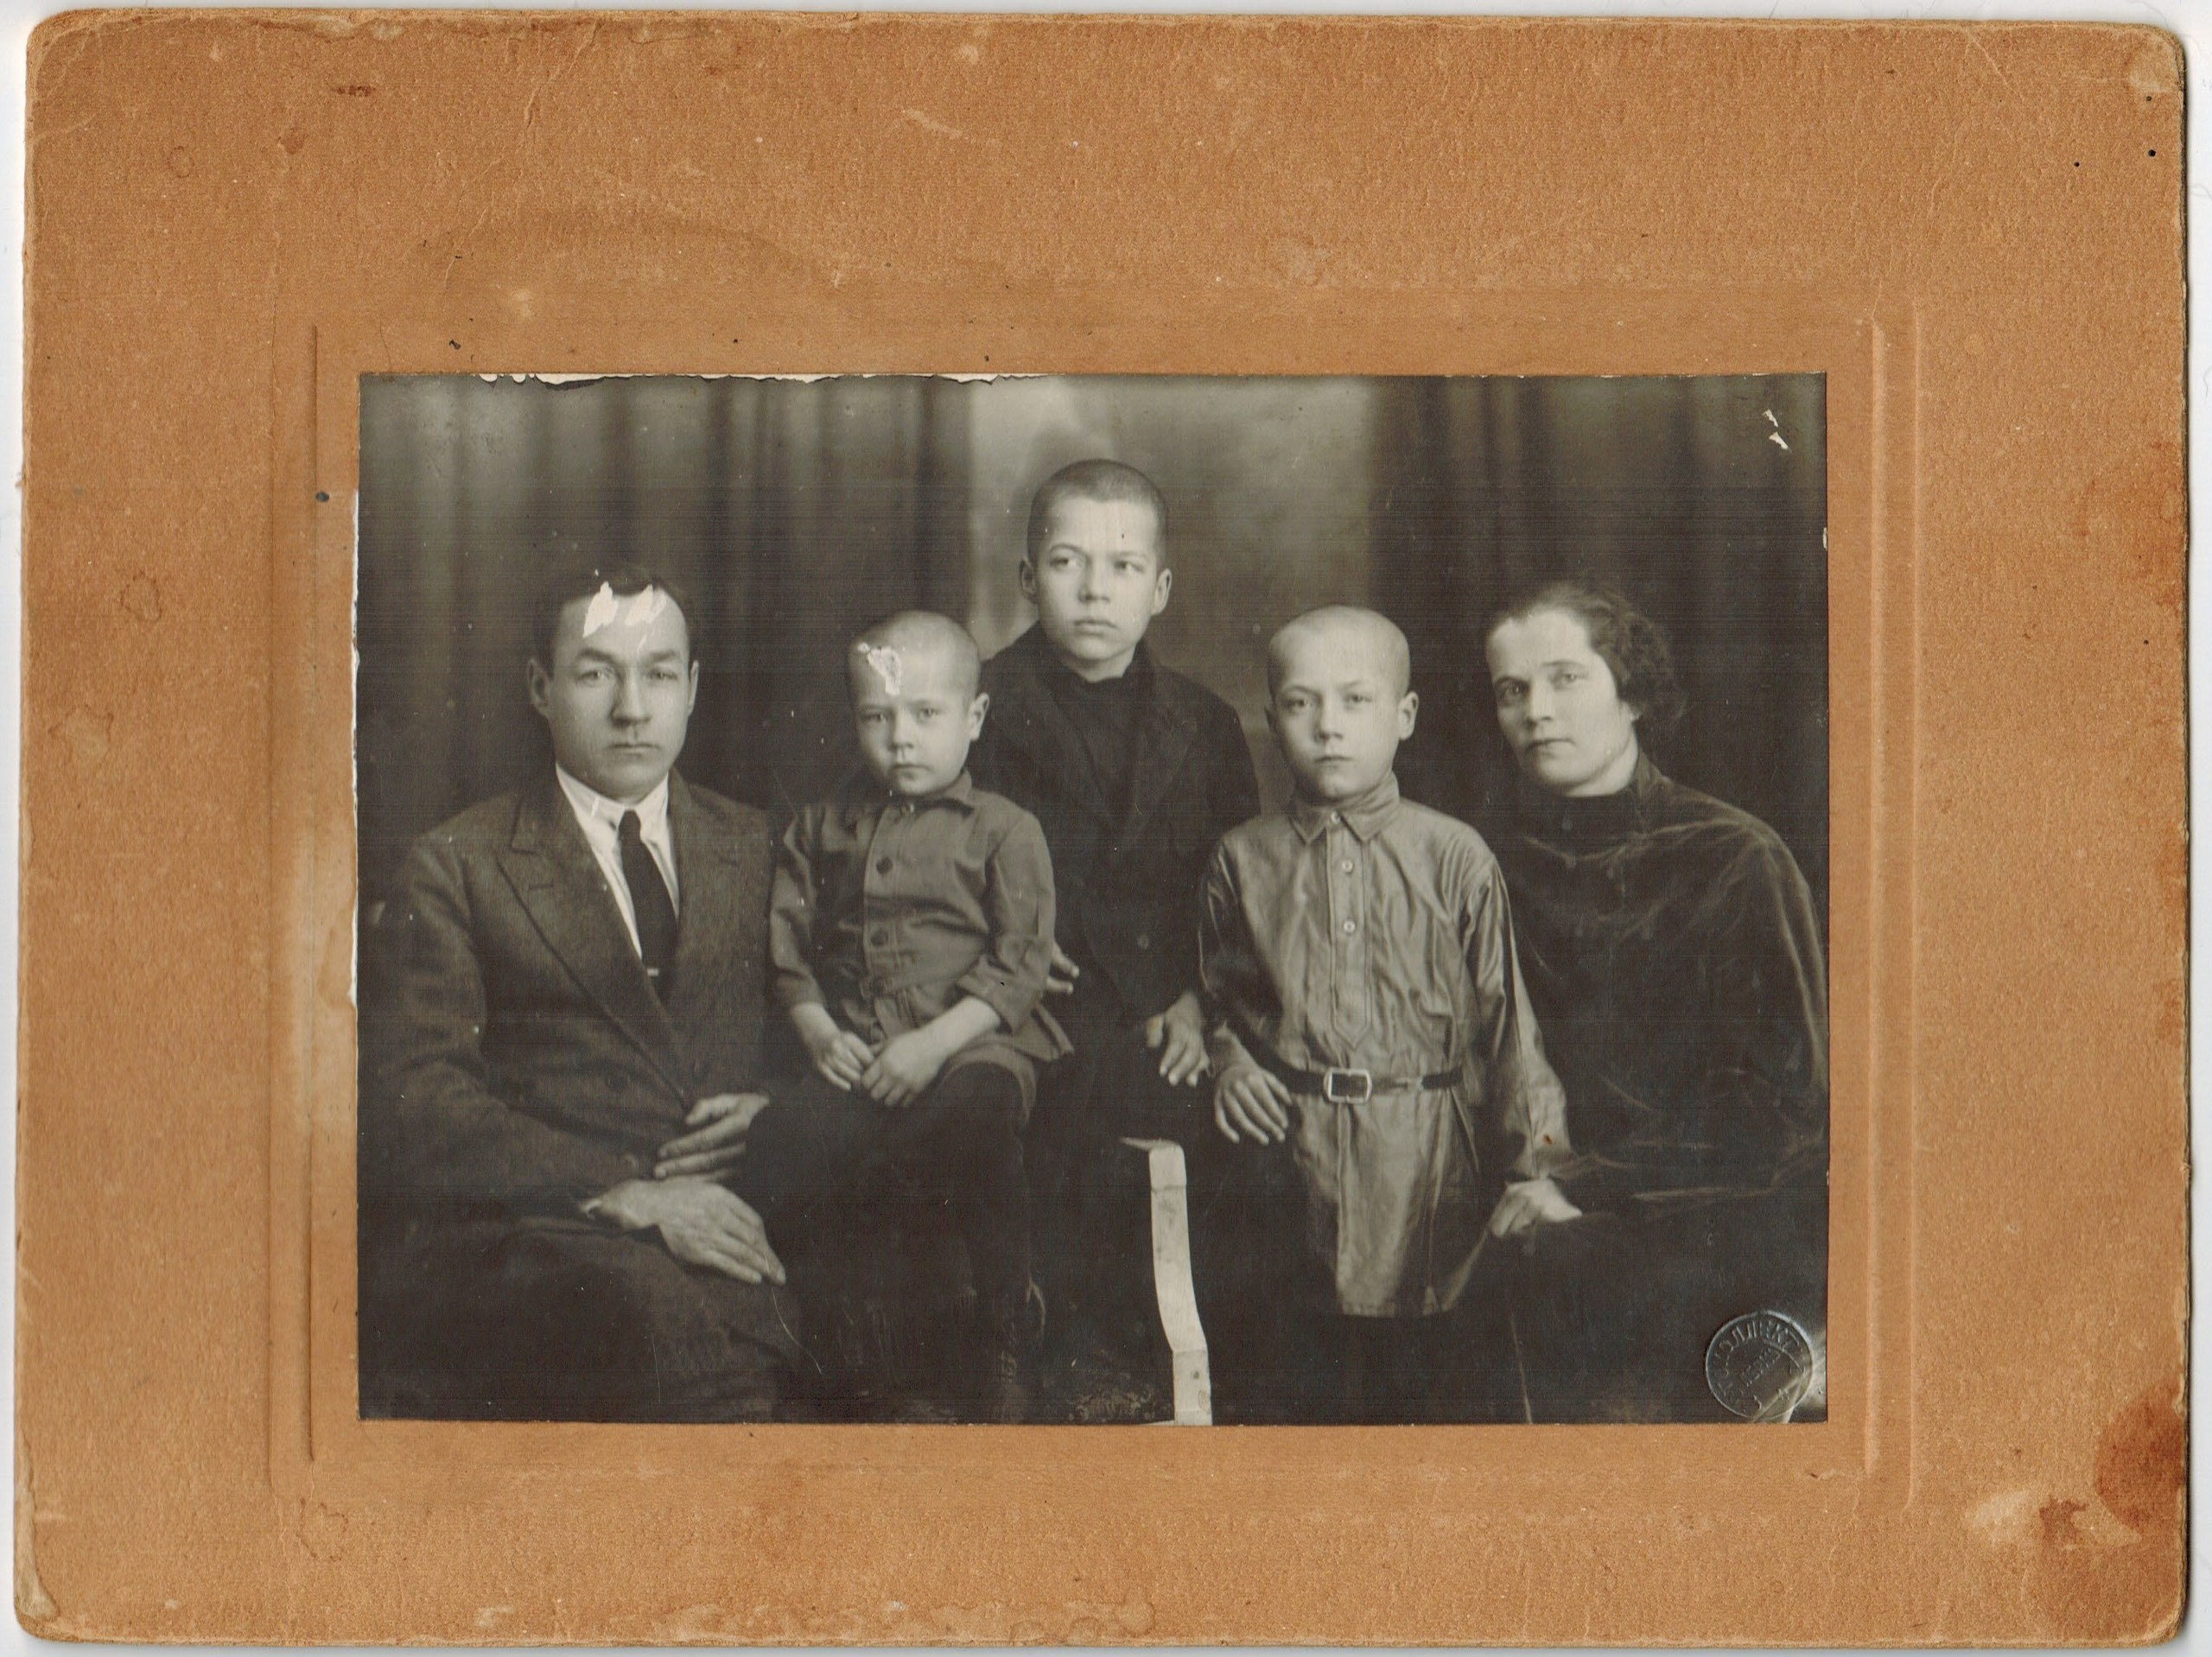 (слева-направо: Иван Михайлович, Александр (старший), Герман (младший), Руф (средний), Мария Иаковлевна). 1933 год, Пермь. Фото предоставлено автором воспоминаний.